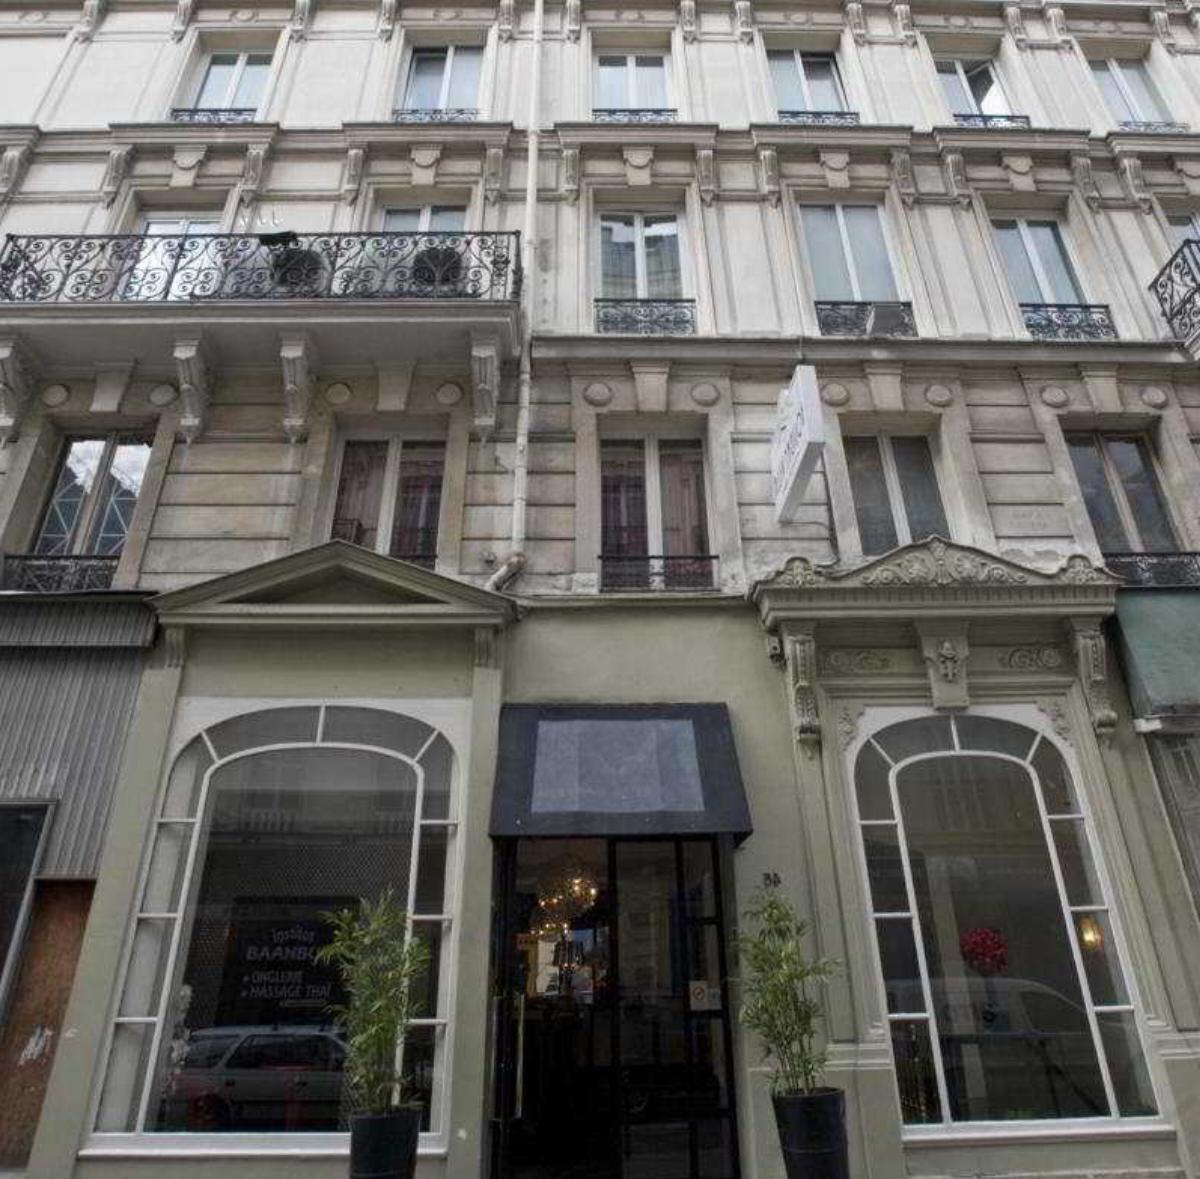 Holiday Villa Layfette Paris Hotel Paris France